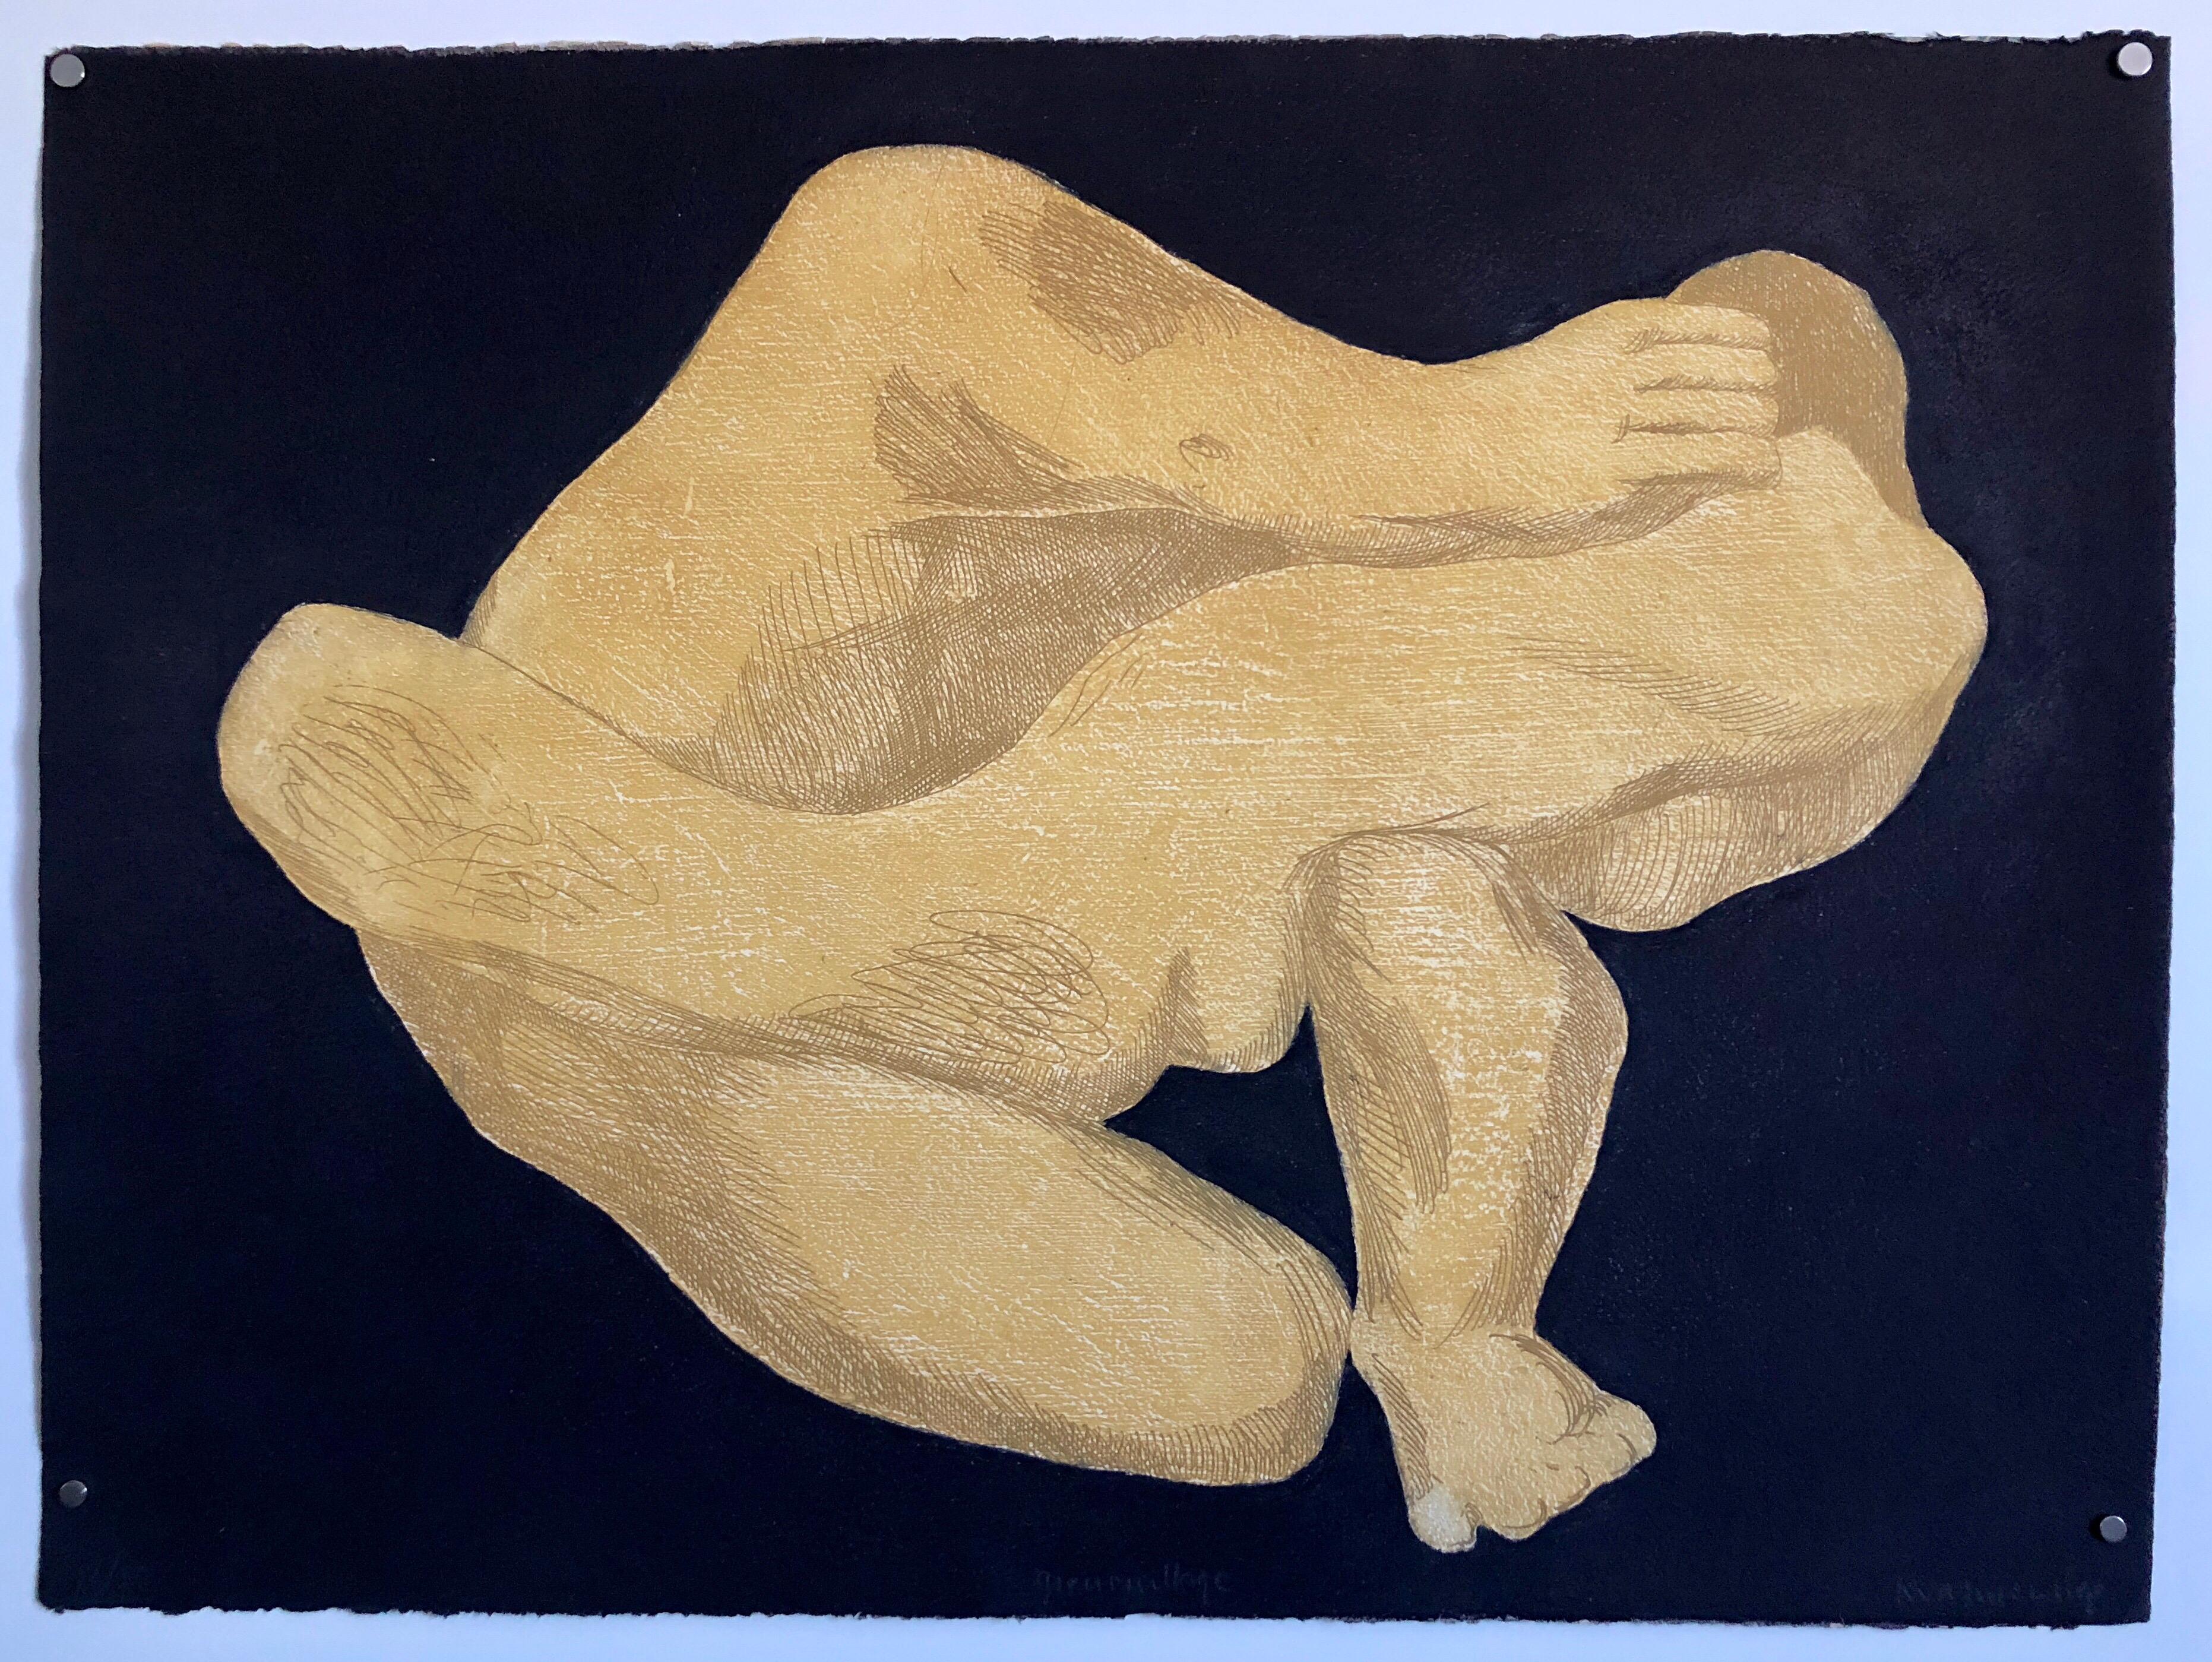 French Polish Woman Modernist Grenouille Abstract Nude Aquatint Etching - Pop Art Print by Barbara Kwasniewska